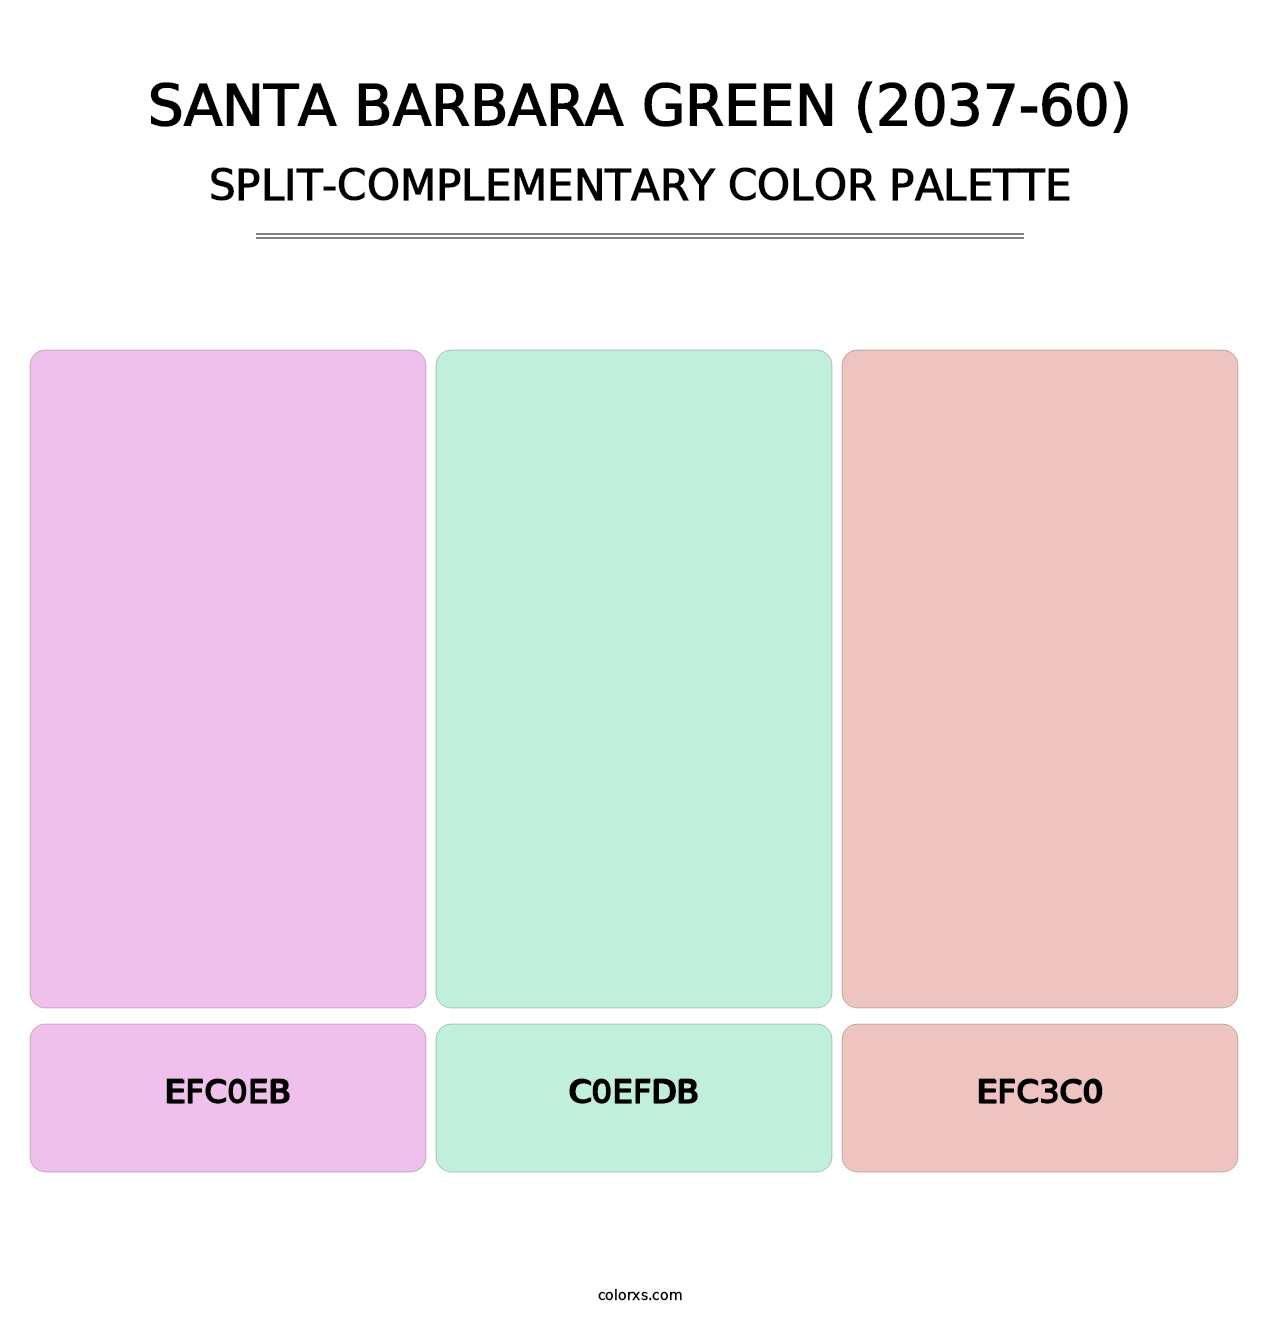 Santa Barbara Green (2037-60) - Split-Complementary Color Palette